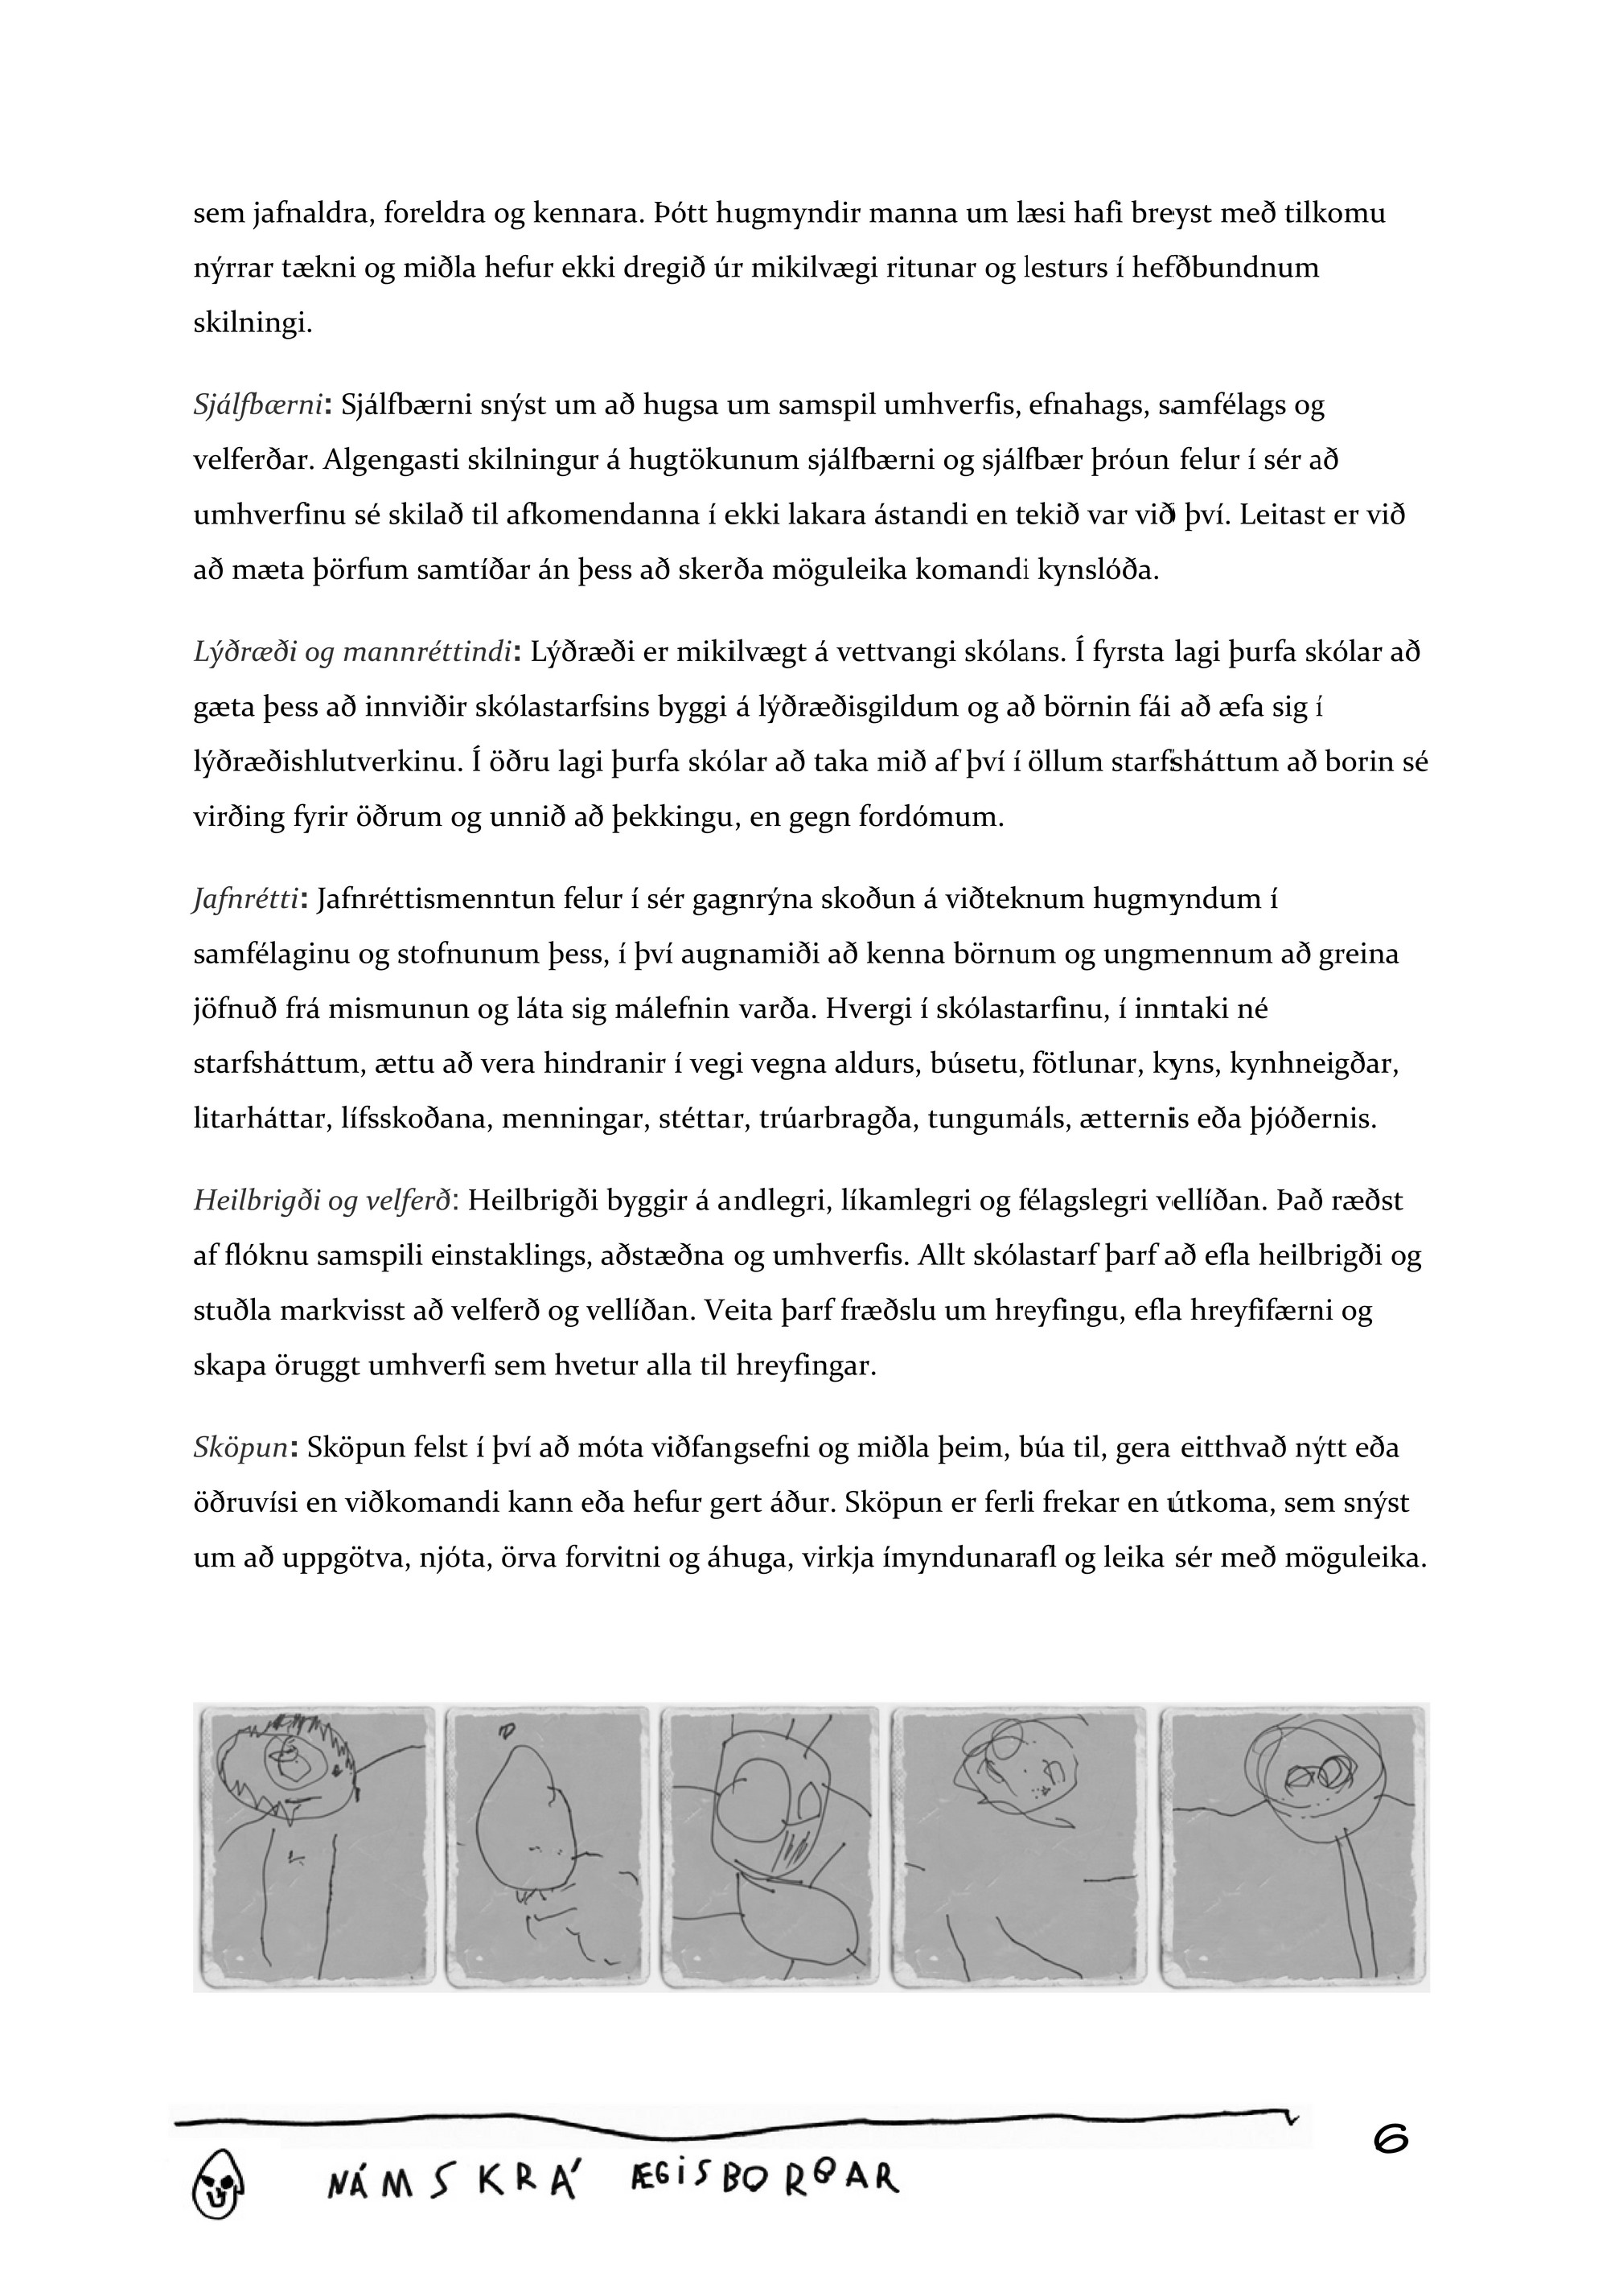 My Publications Aegisborg Namskra Page 1 Created With Publitas Com